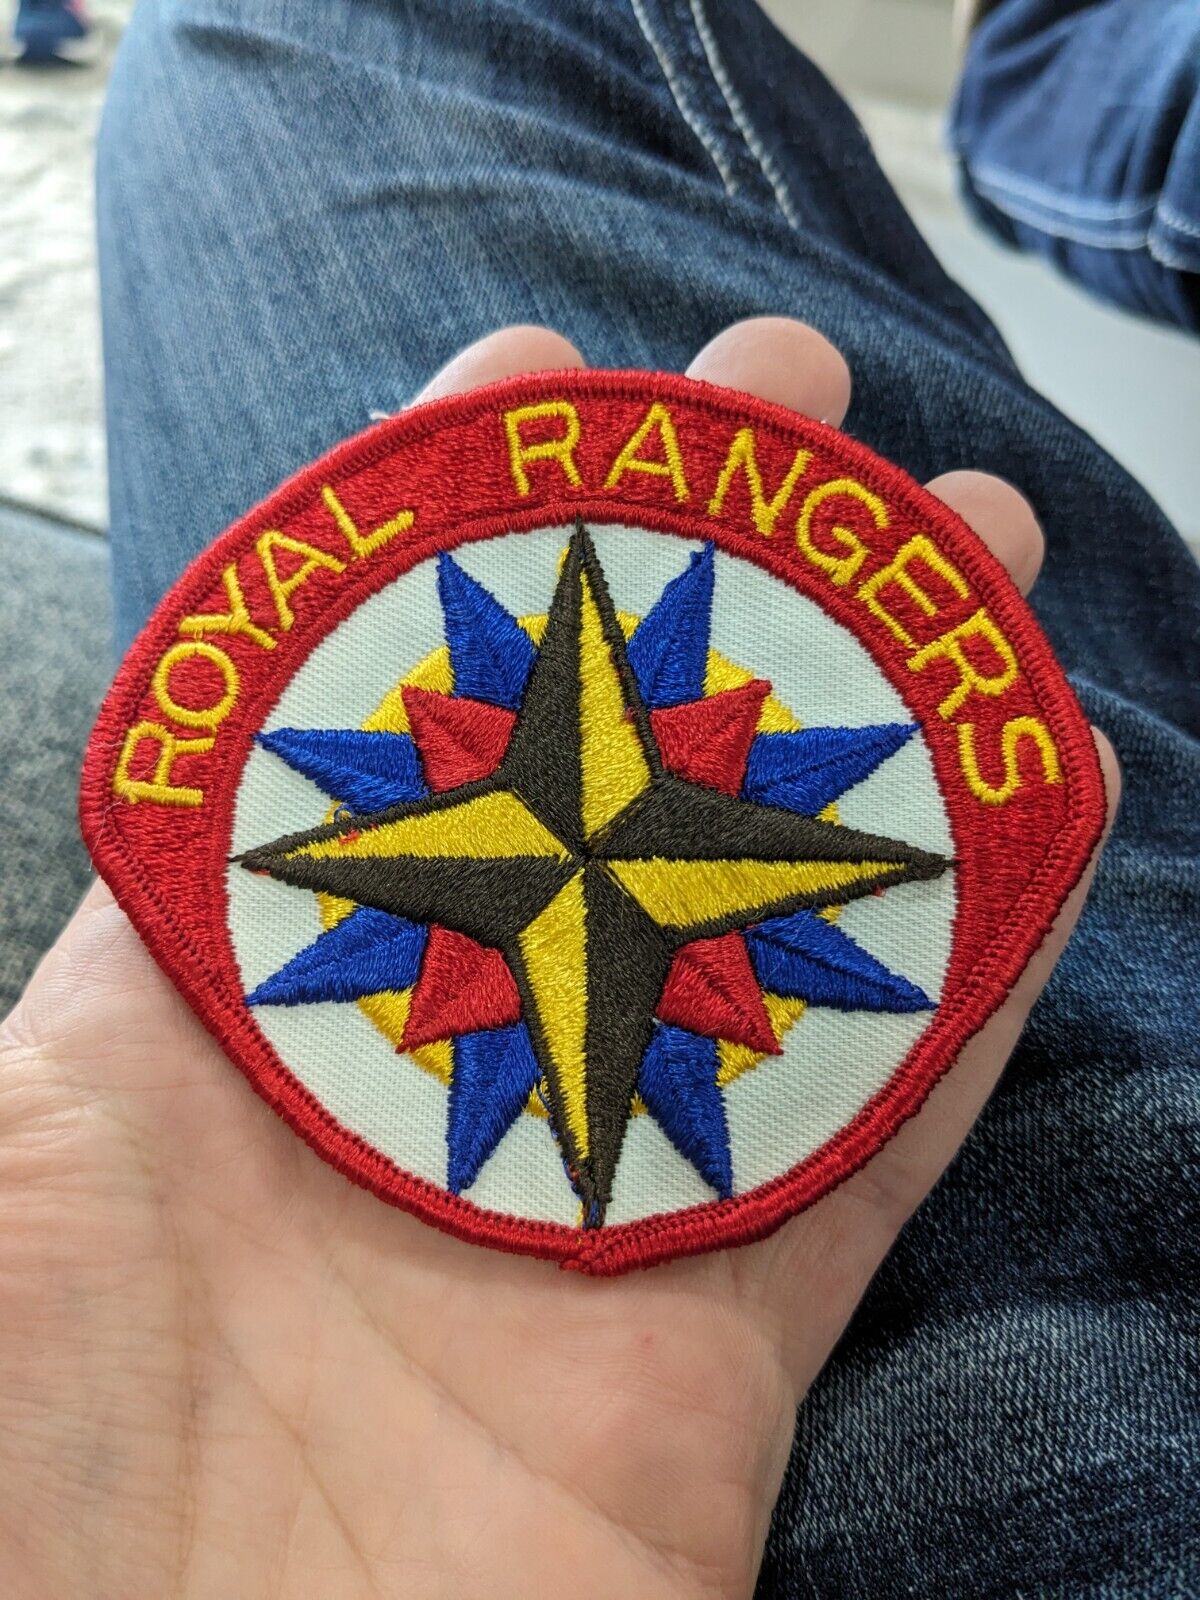 Vintage Royal Rangers Arm Patch Uniform Emblem Star 4\